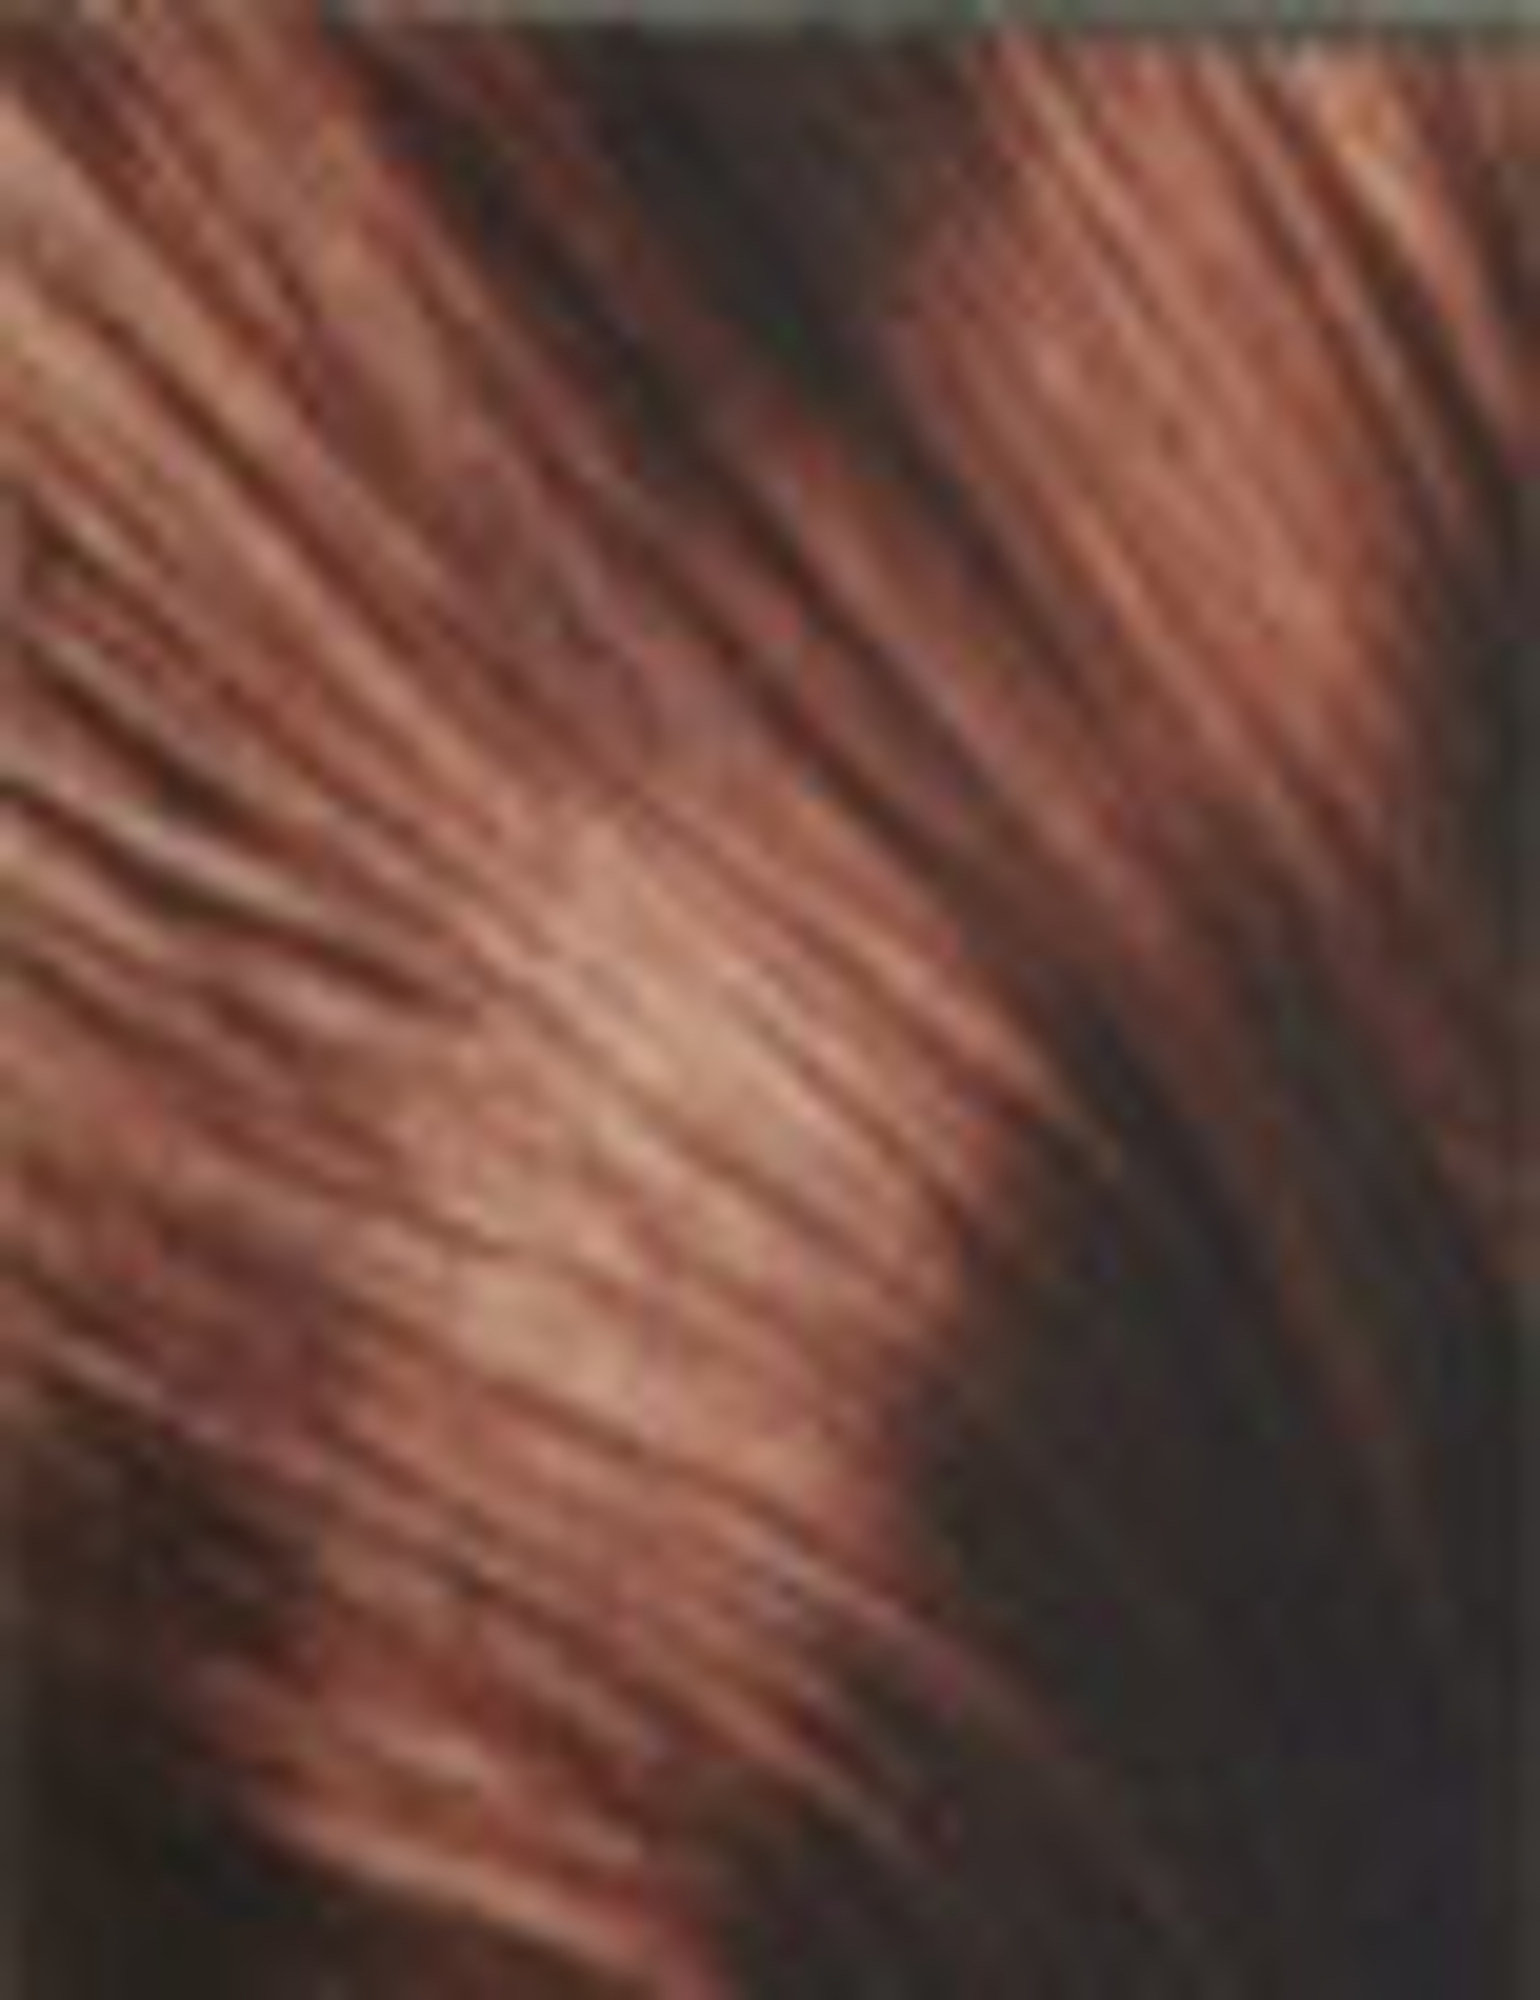 Collistar Special Perfect Hair Magica CC Hair 150ml plaukų kaukė